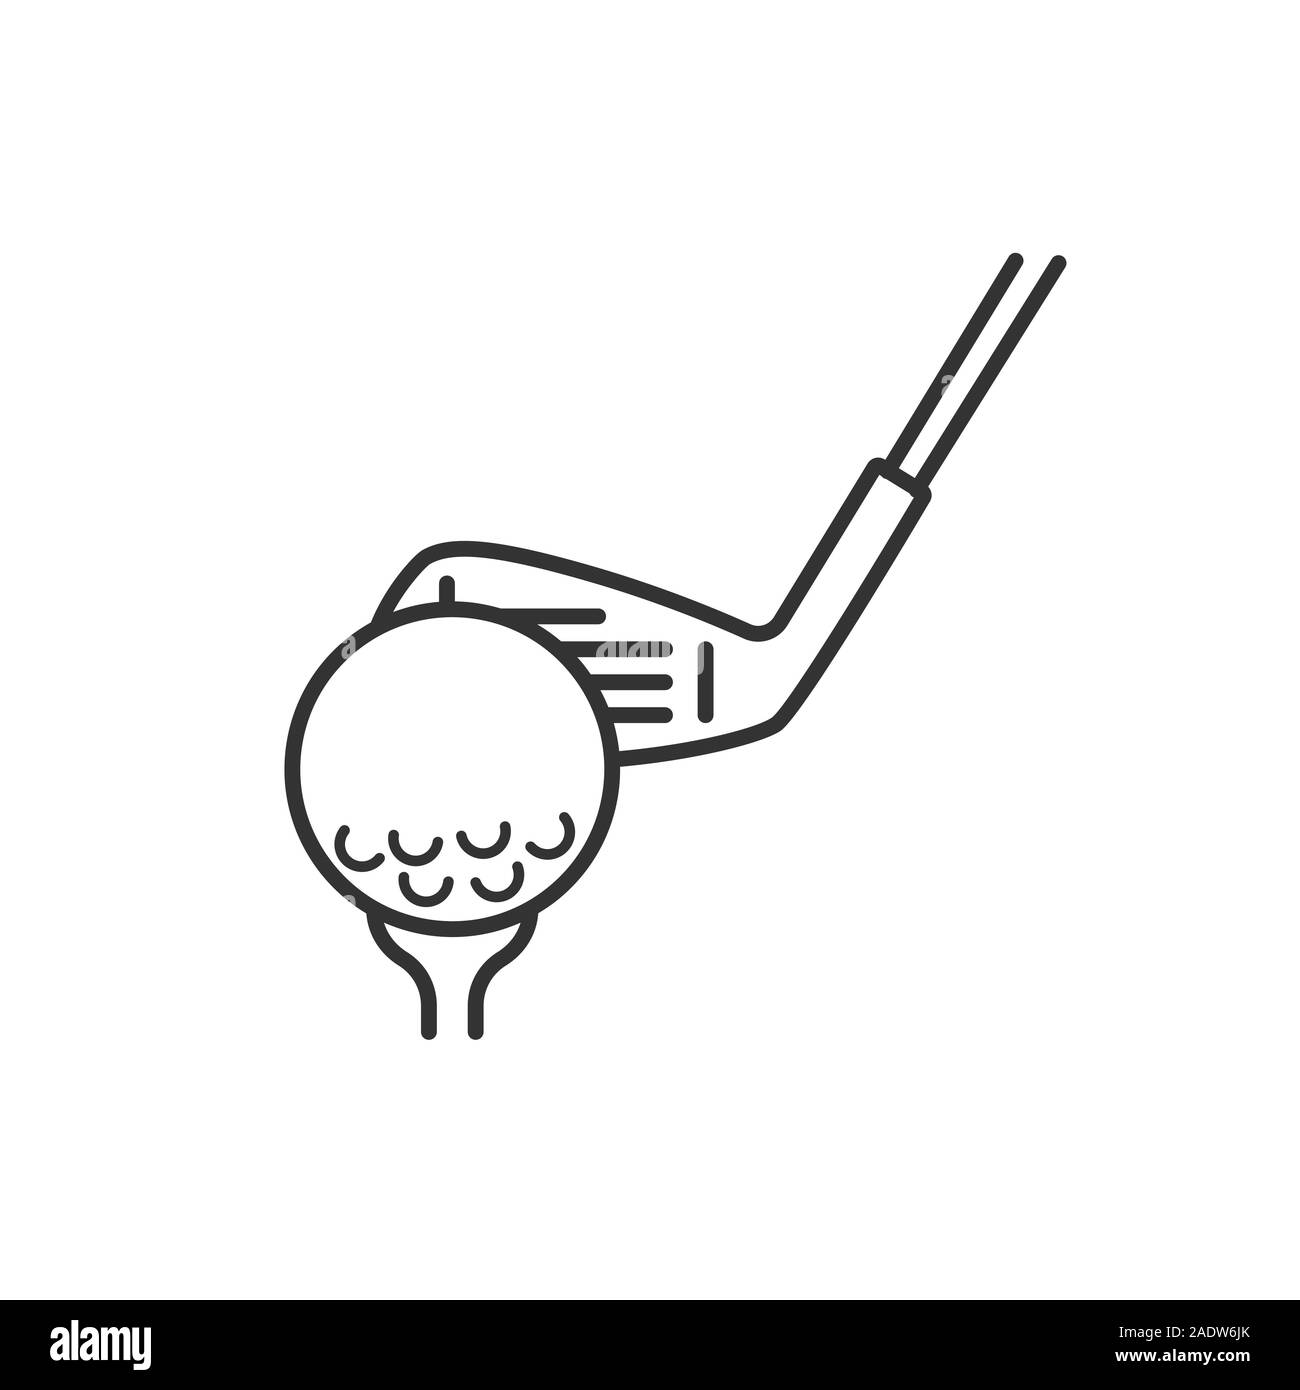 How to draw Golf Club step by step 